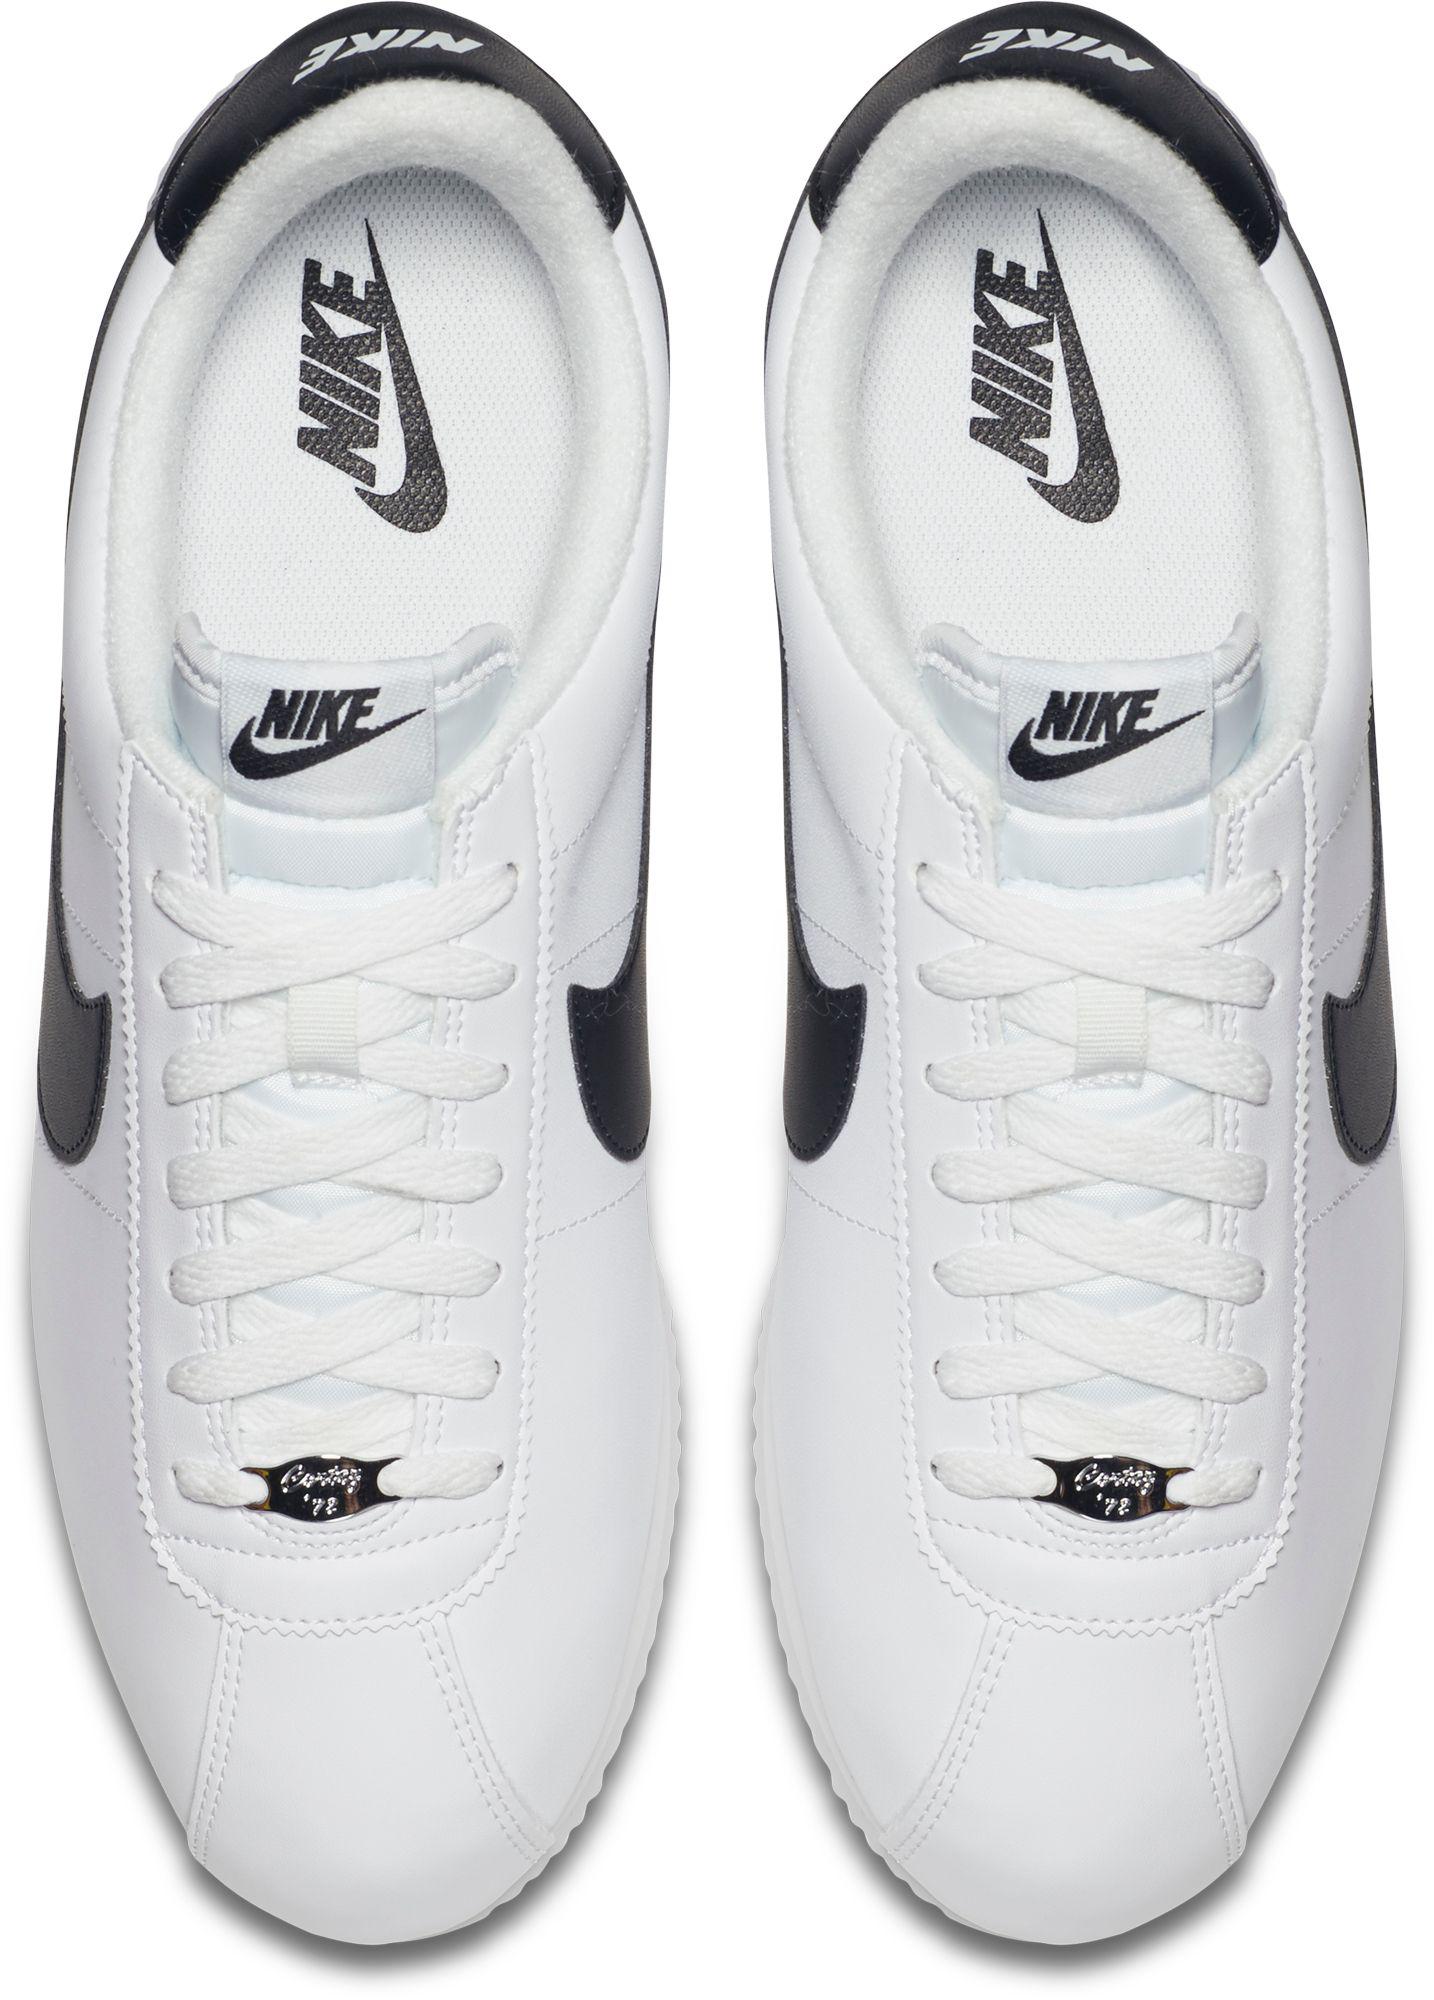 Nike Cortez Basic Leather Og Shoe in White - Save 61% | Lyst